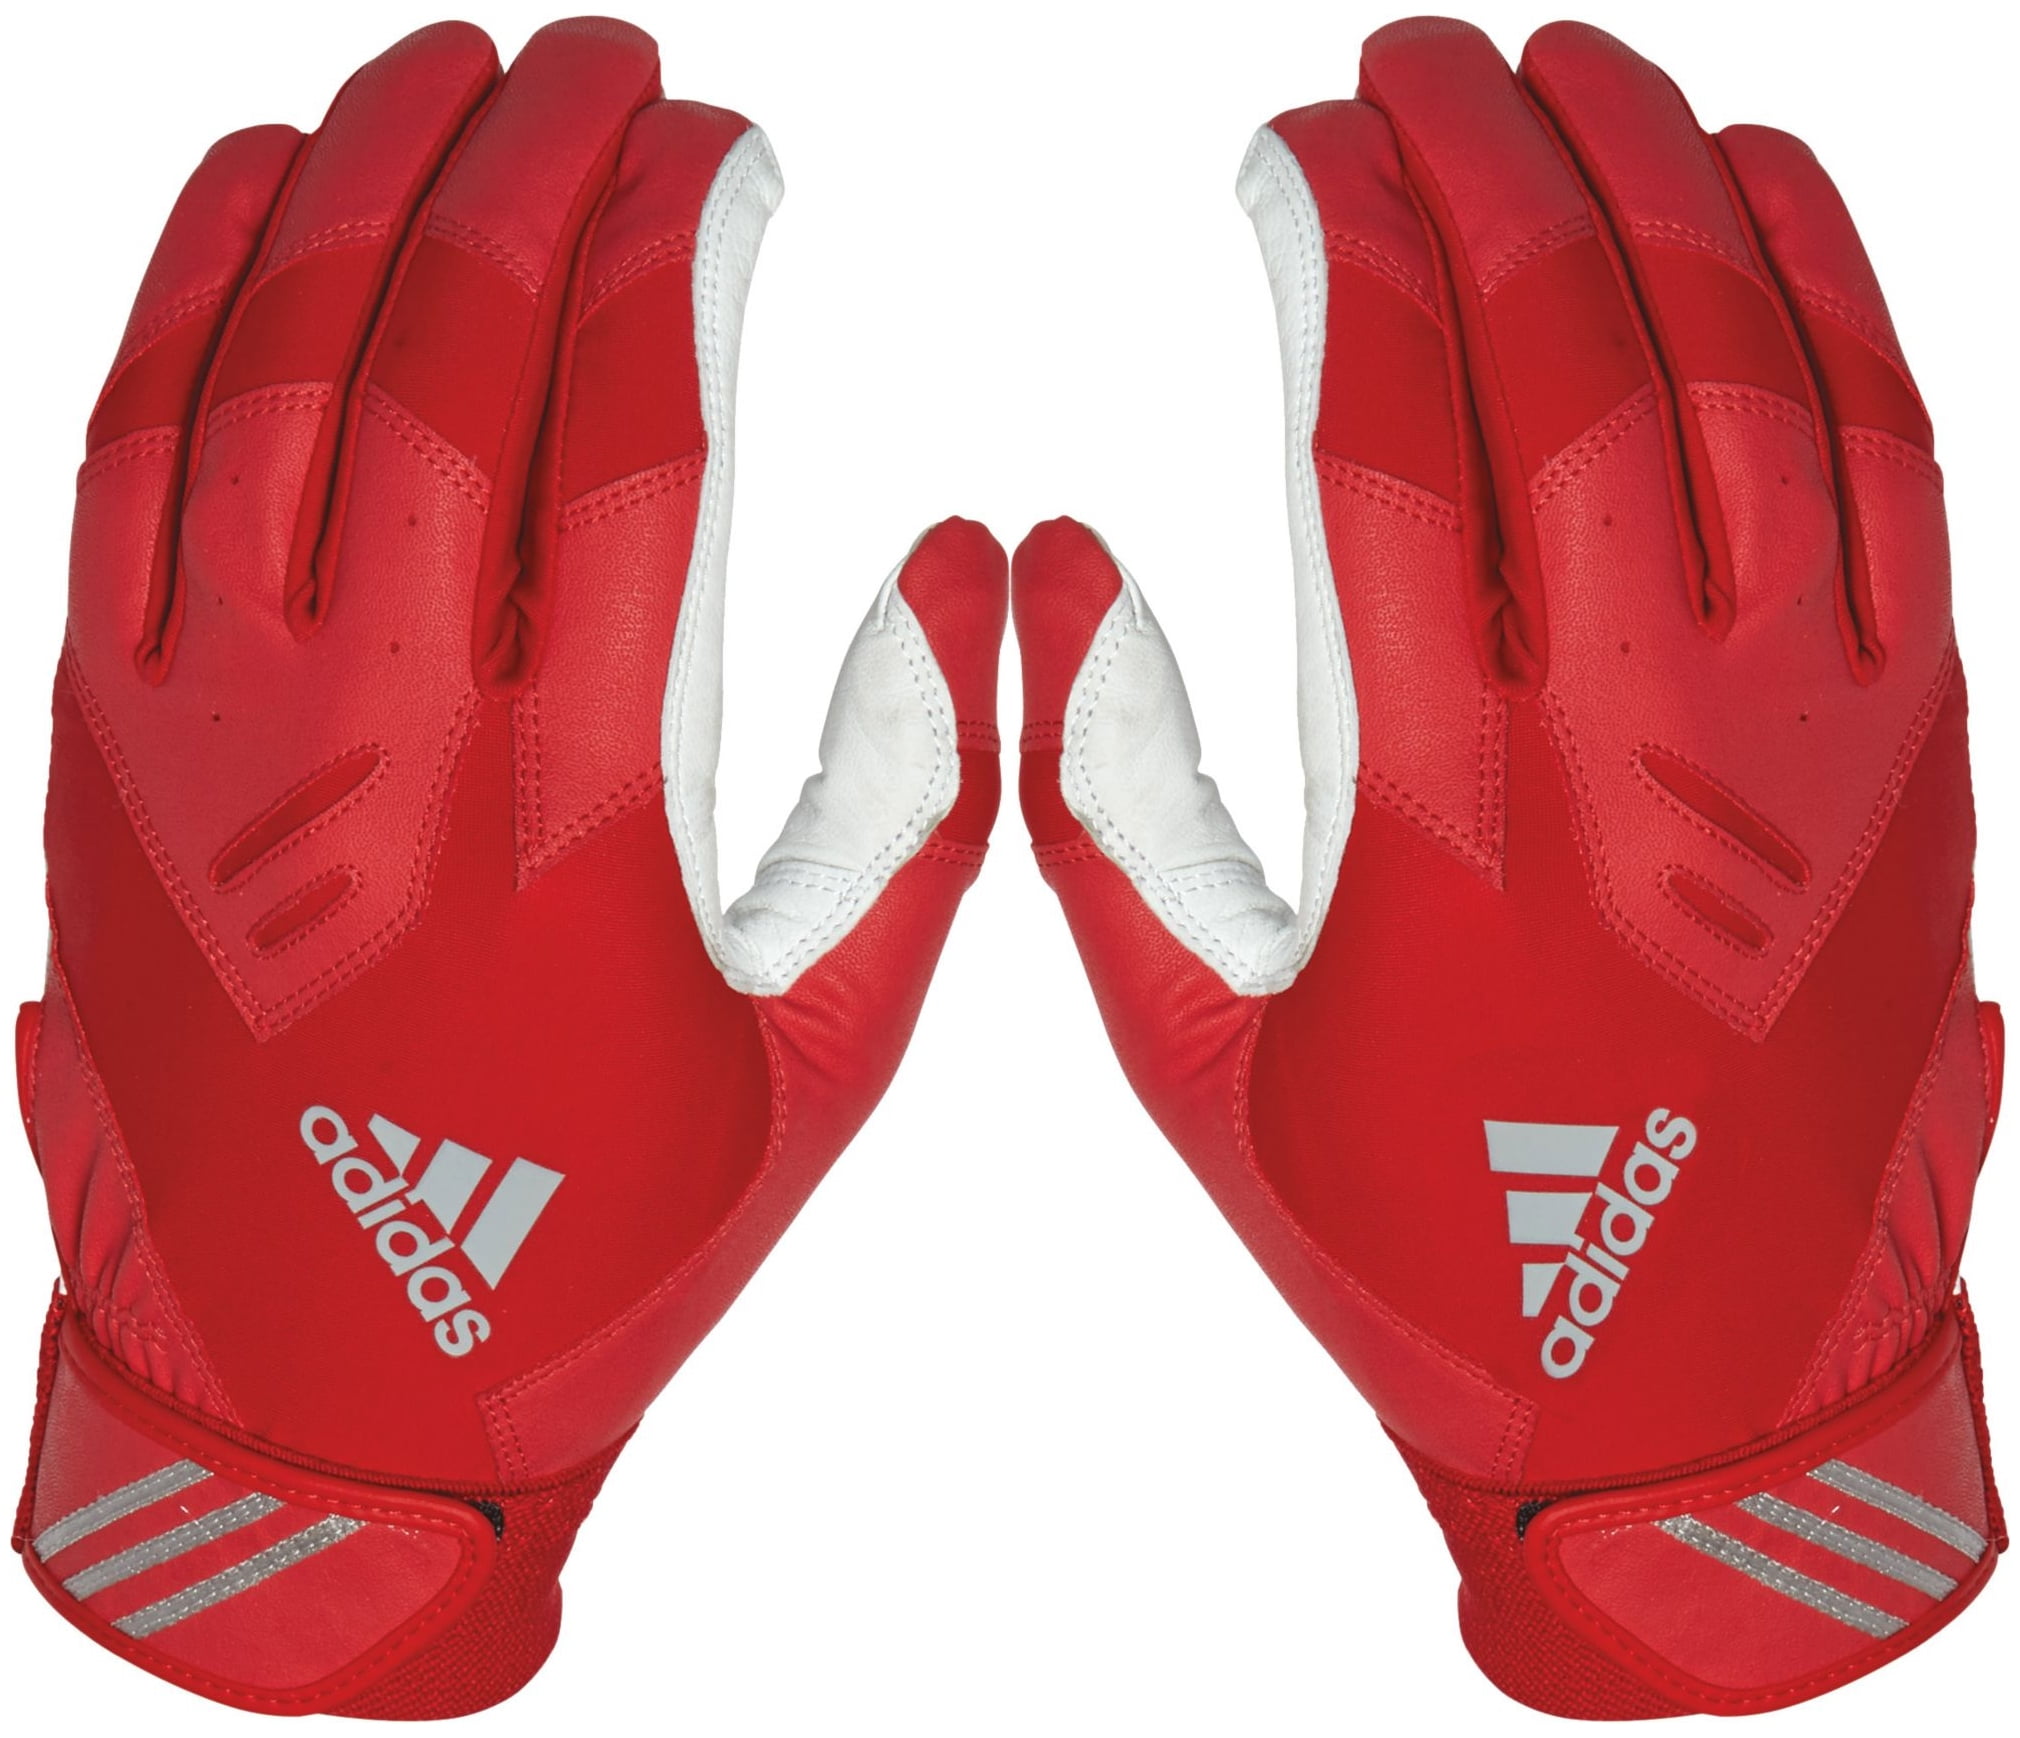 adidas trilogy glove